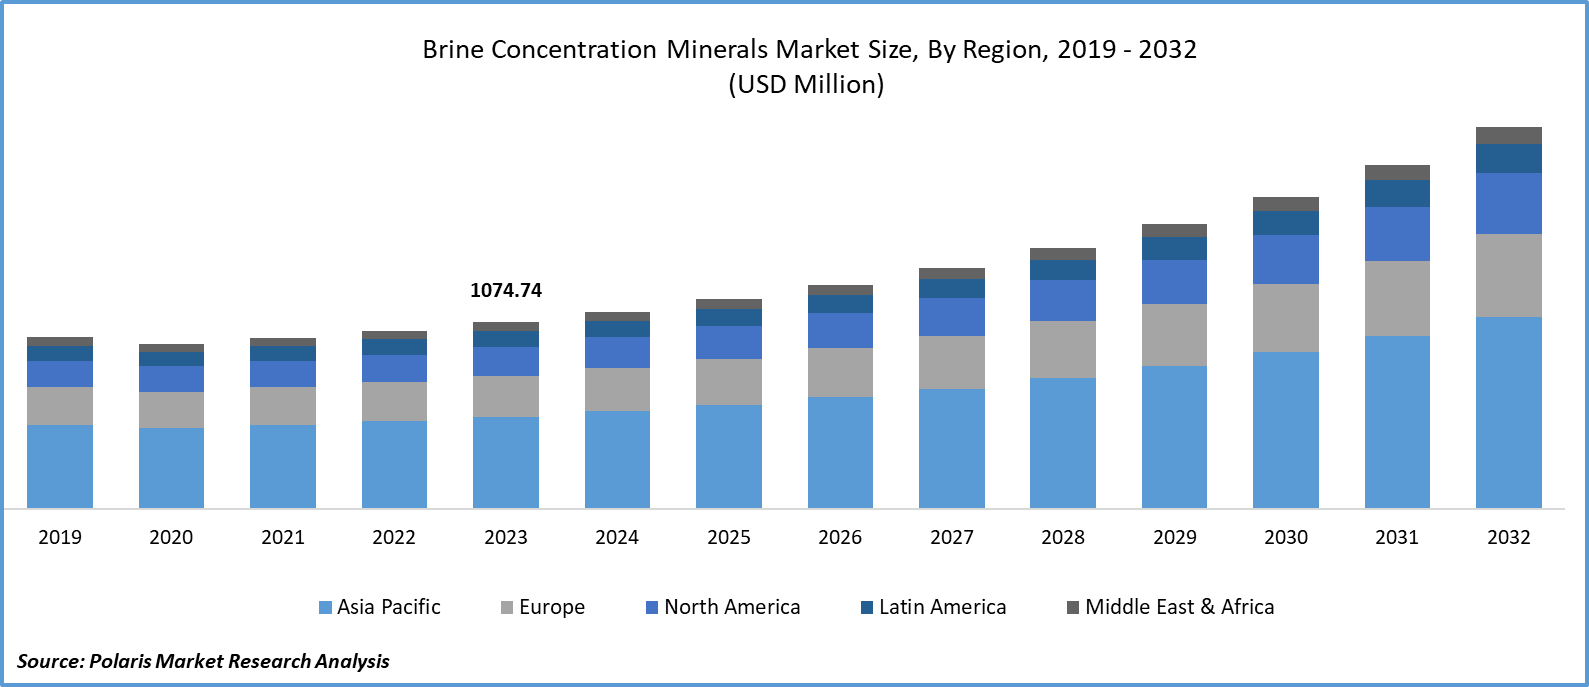 Brine Concentration Minerals Market Size